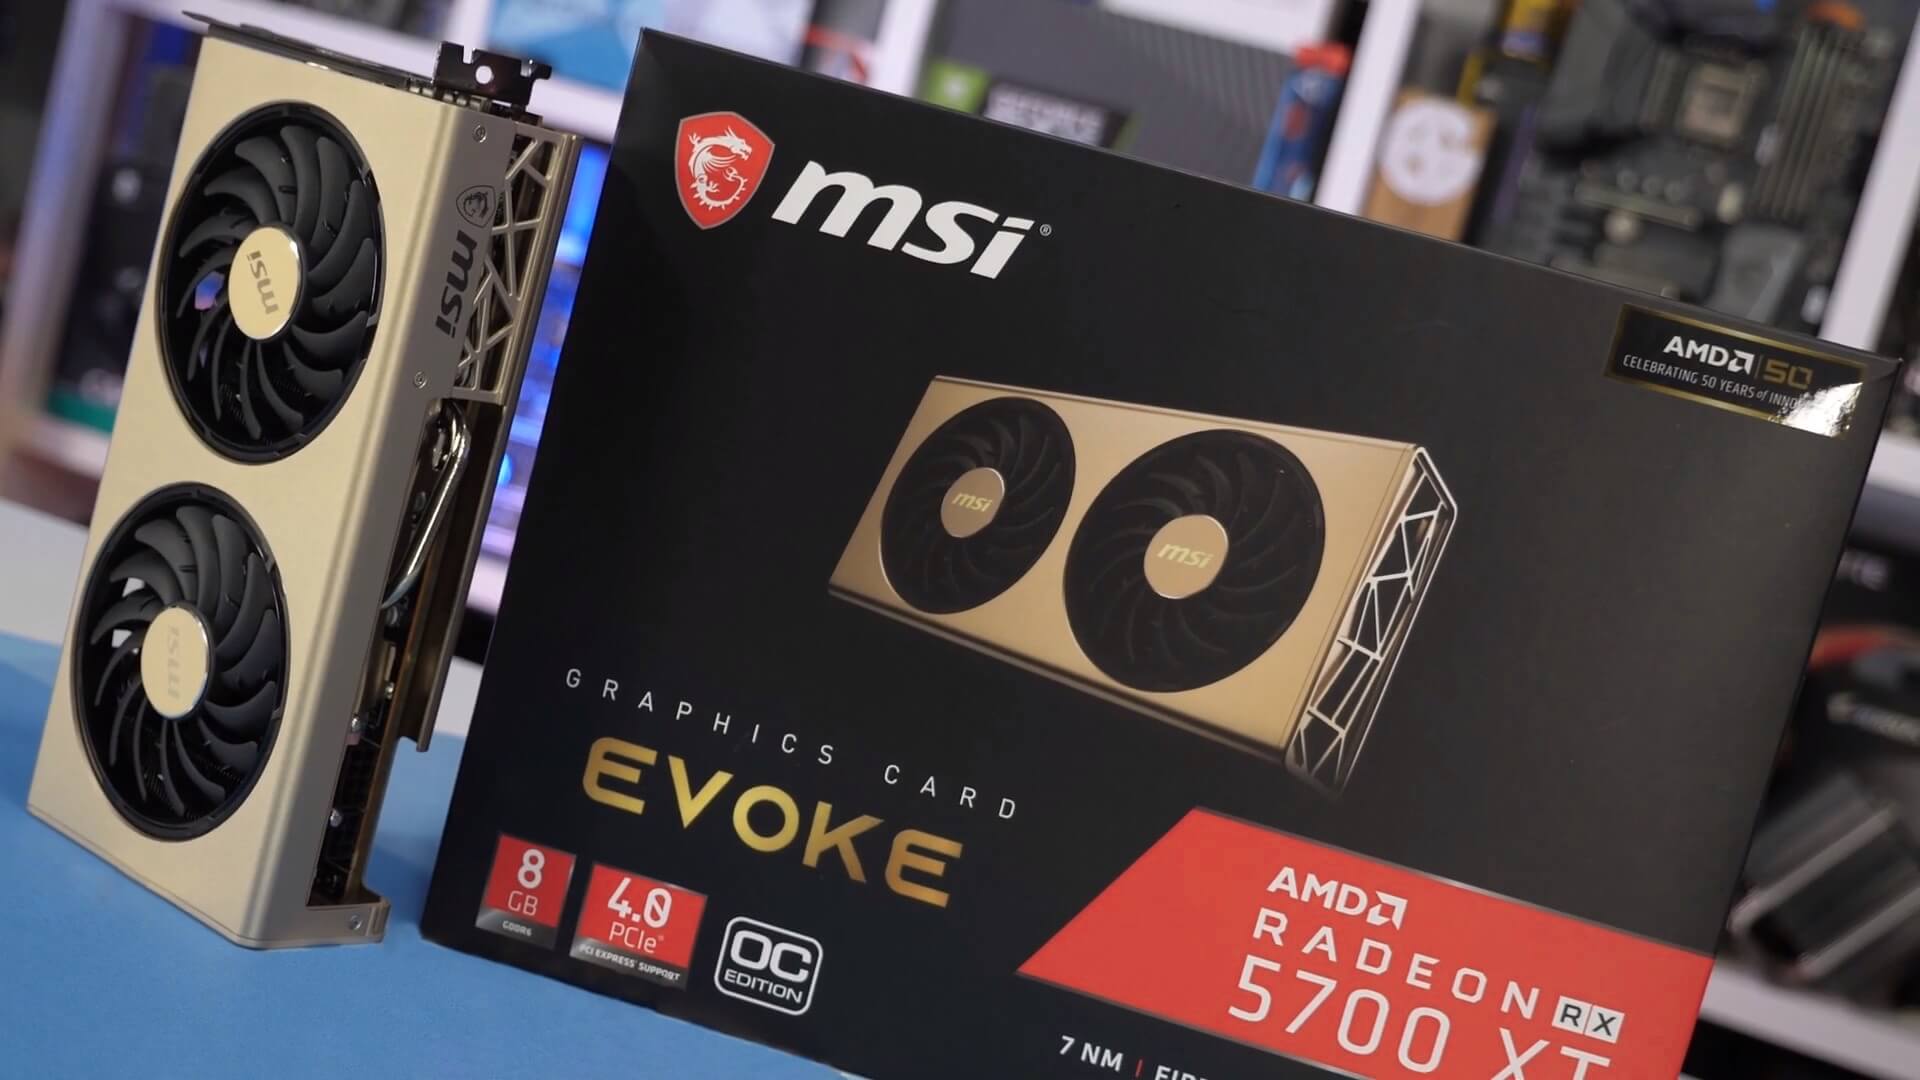 MSI Radeon RX 5700 XT Evoke OC Review Photo Gallery - TechSpot